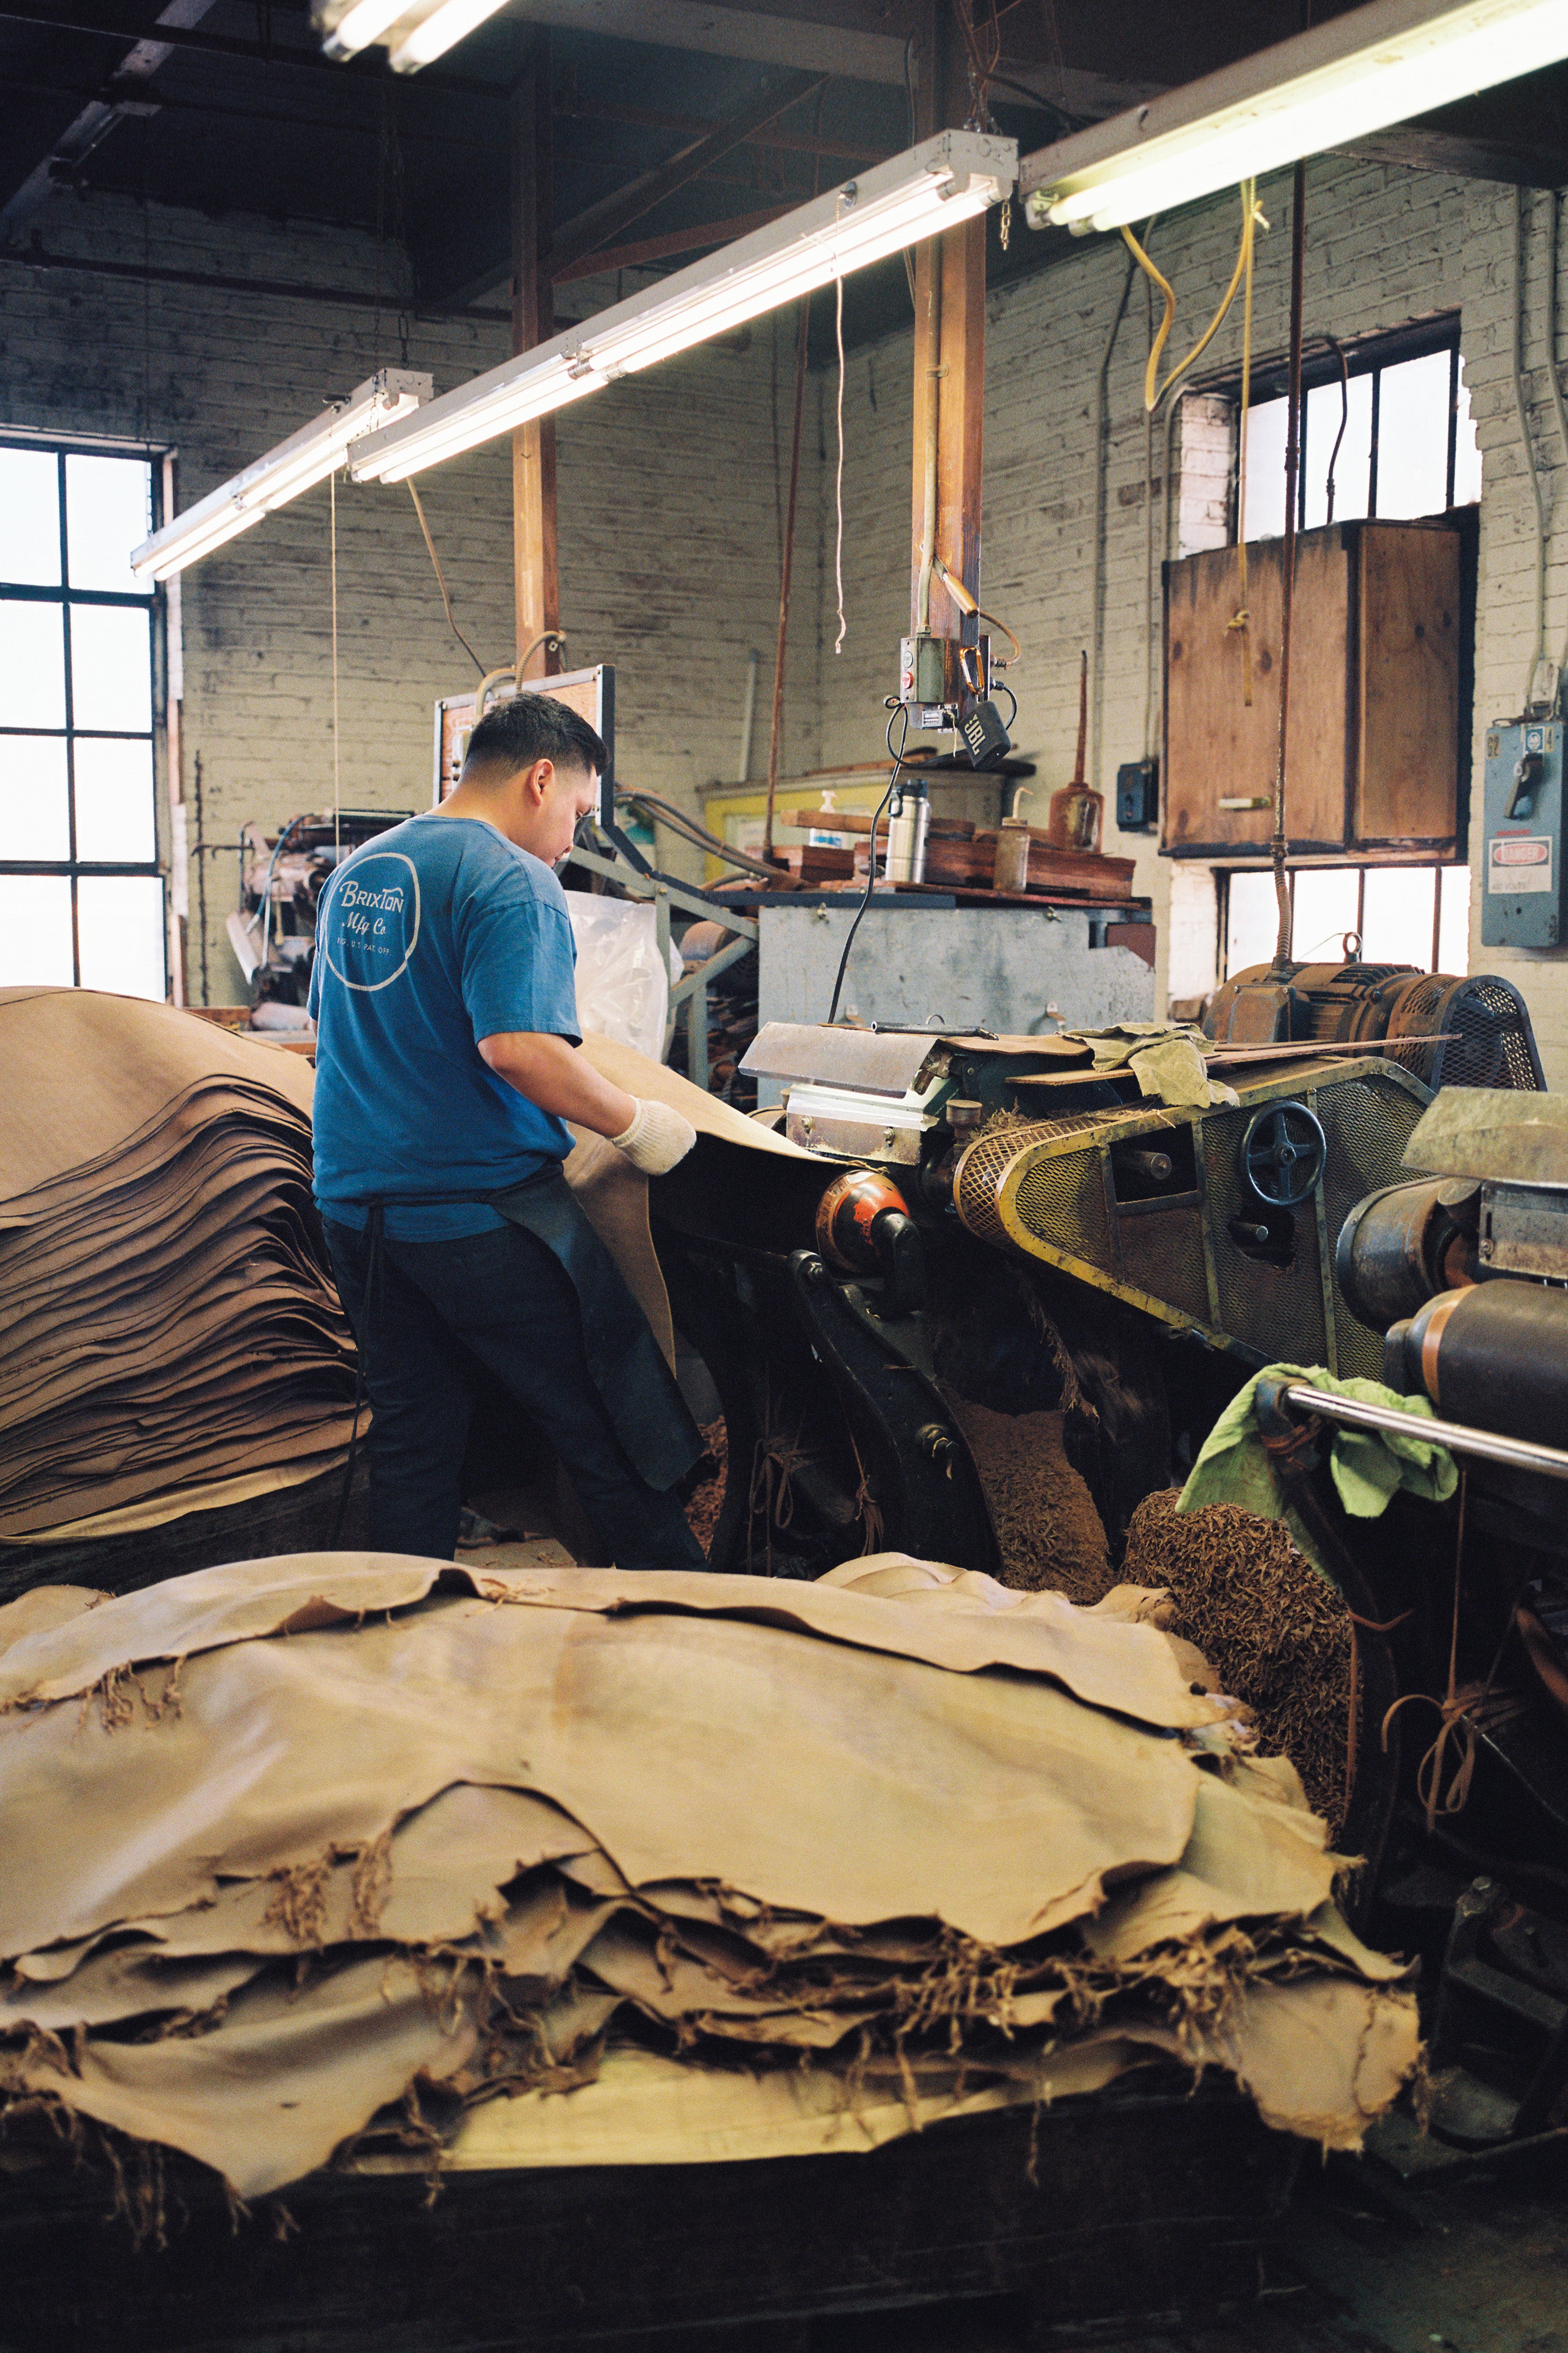 A man trims down leather at a machine.